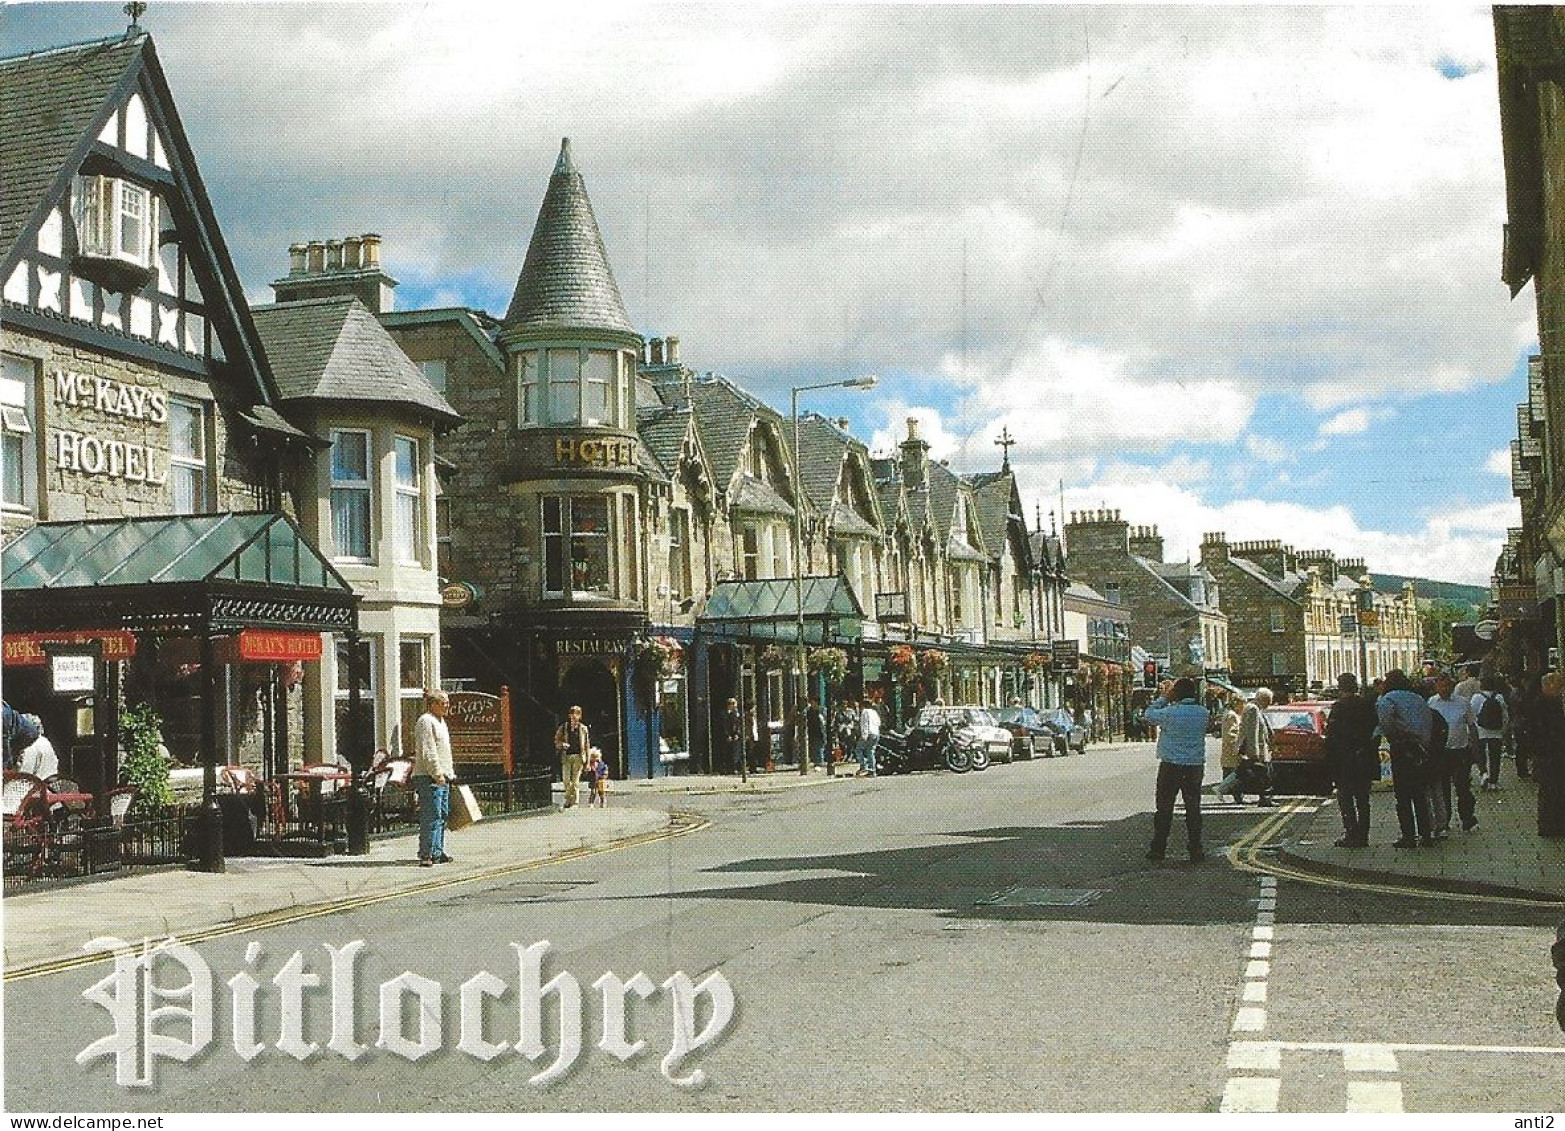 United Kingdom  - Pictoral Postcard   Pitlochry - Tayside, Scotland   - Unused Card - Perthshire